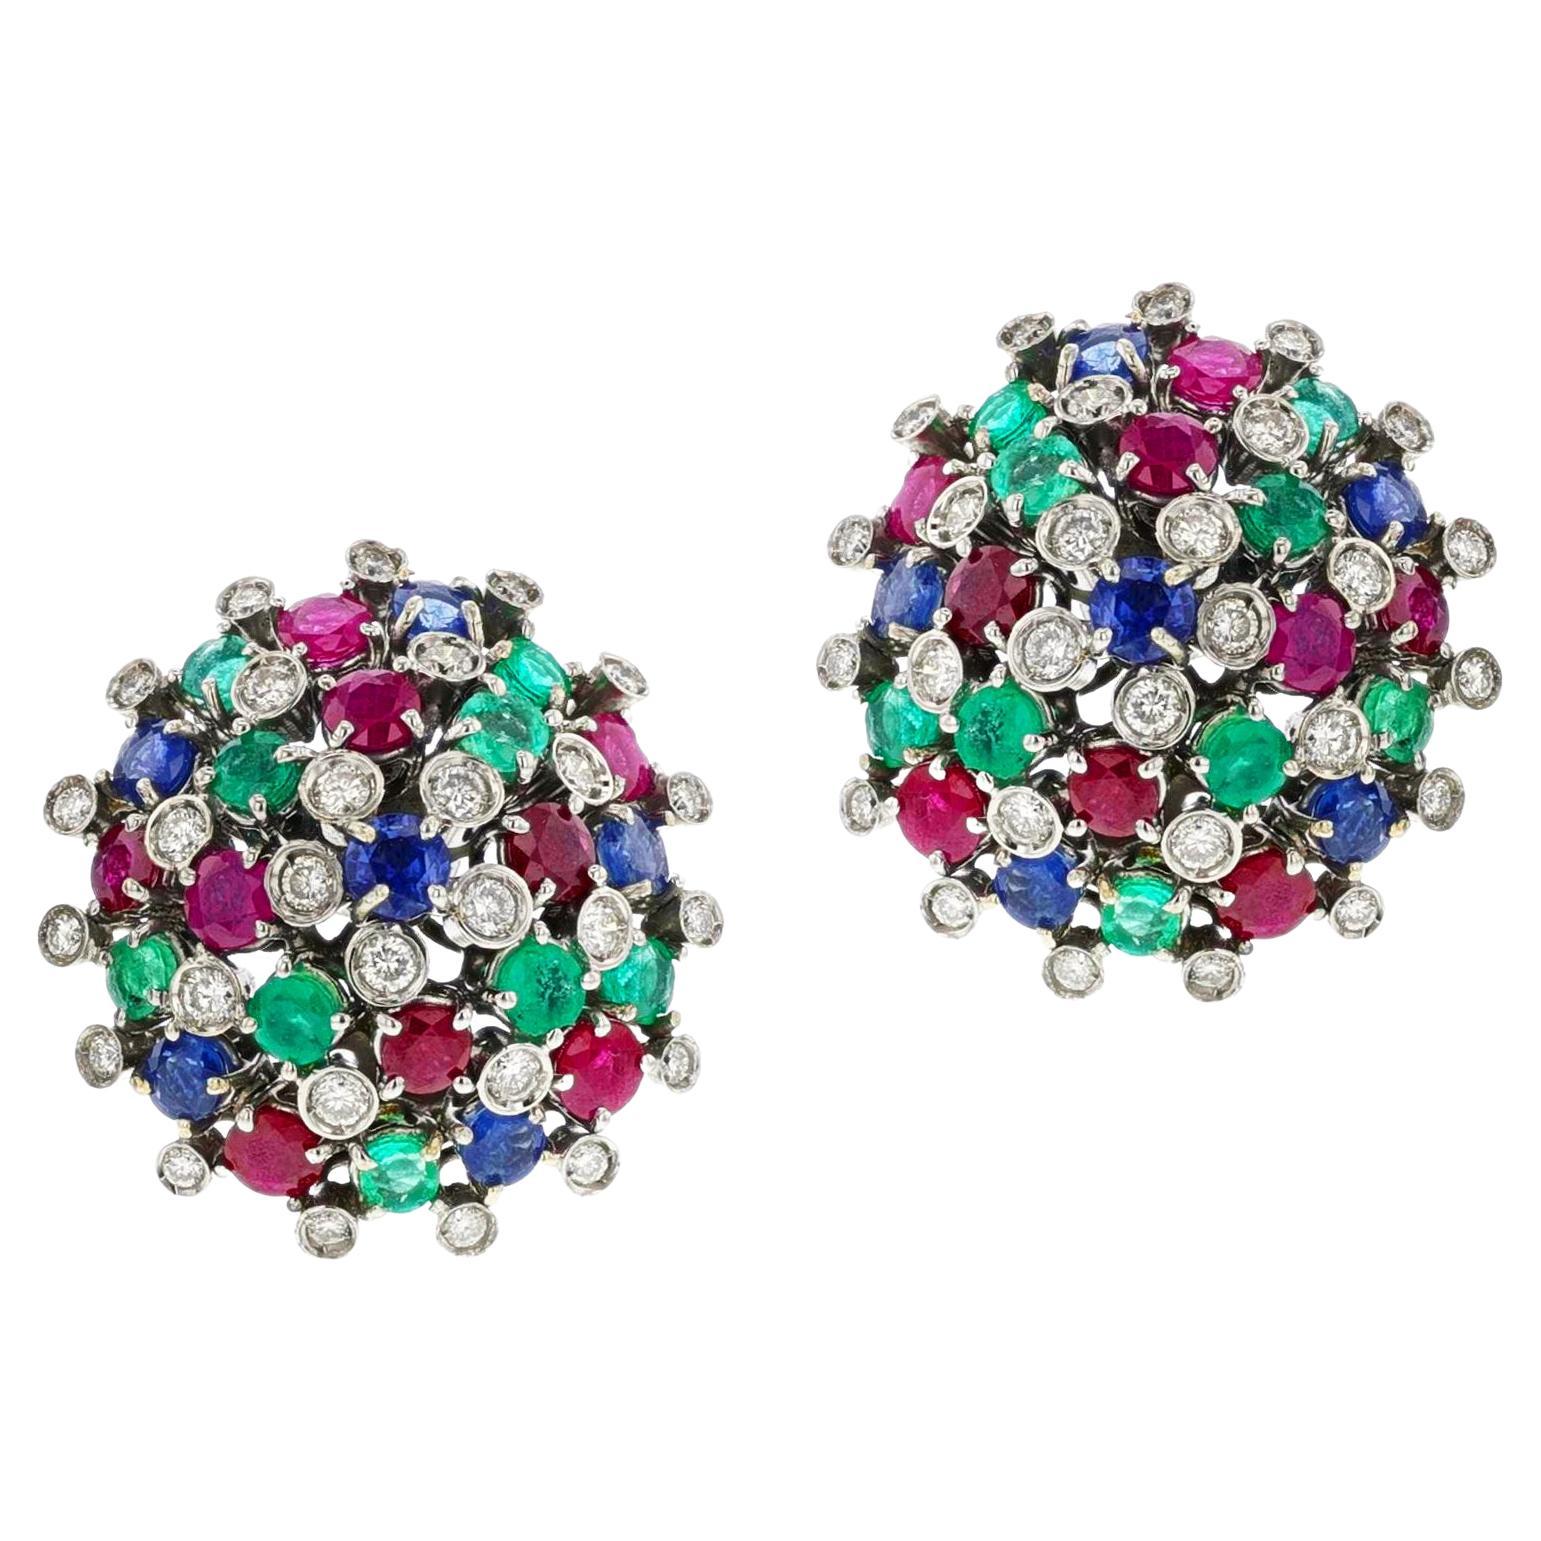 Runde Rubin-, Smaragd-, Saphir- und Diamant-Kuppel-Ohrringe, 18k